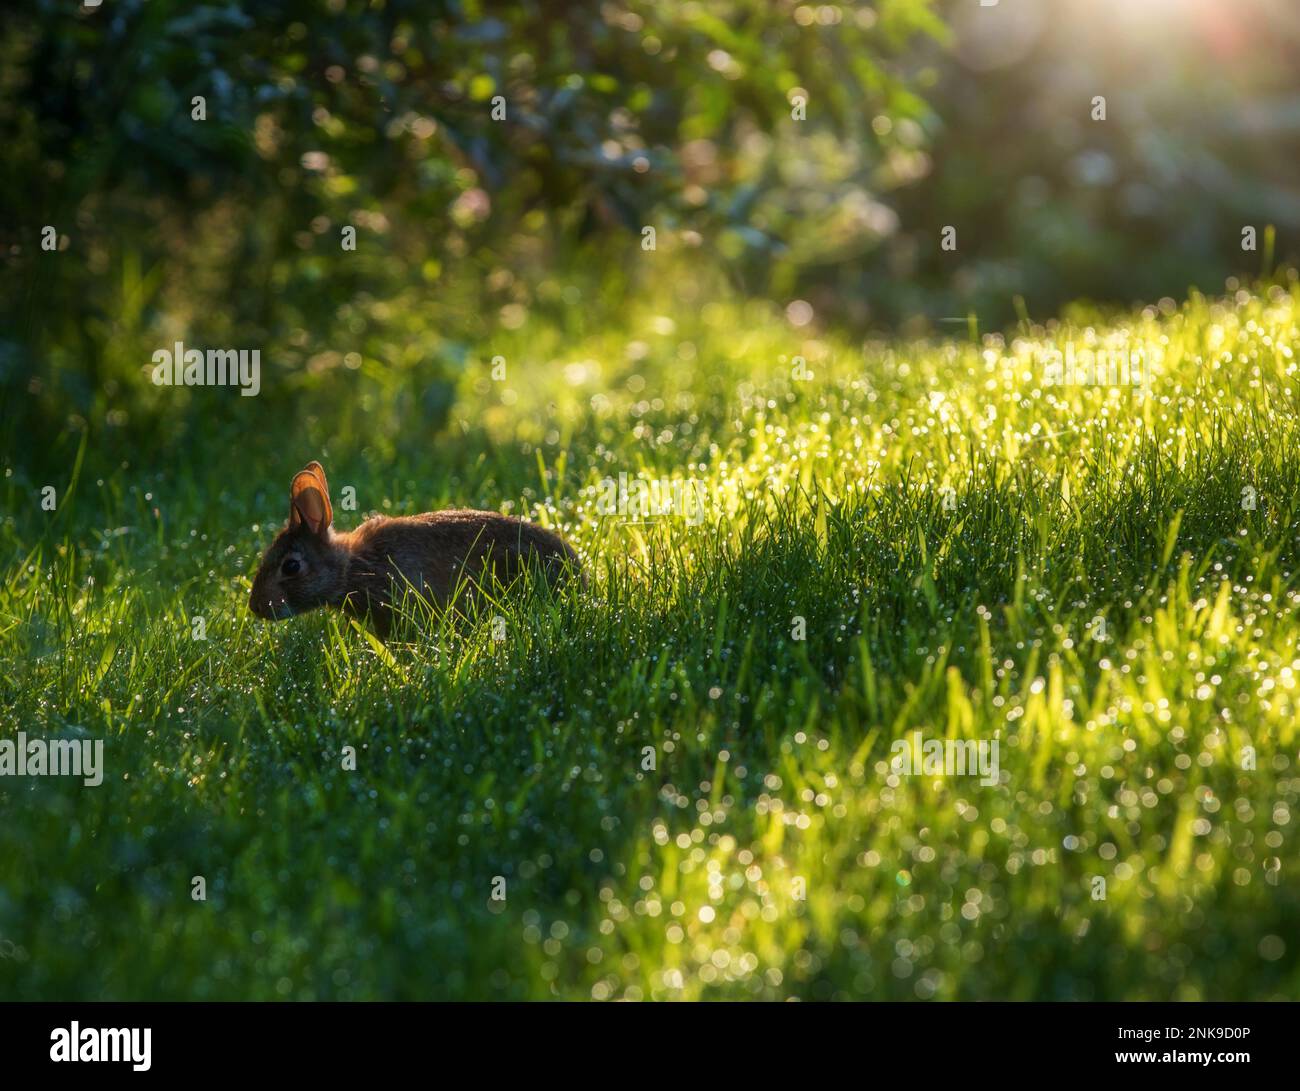 Rabbit feeding on dewy grass in the morning sunlight. Stock Photo